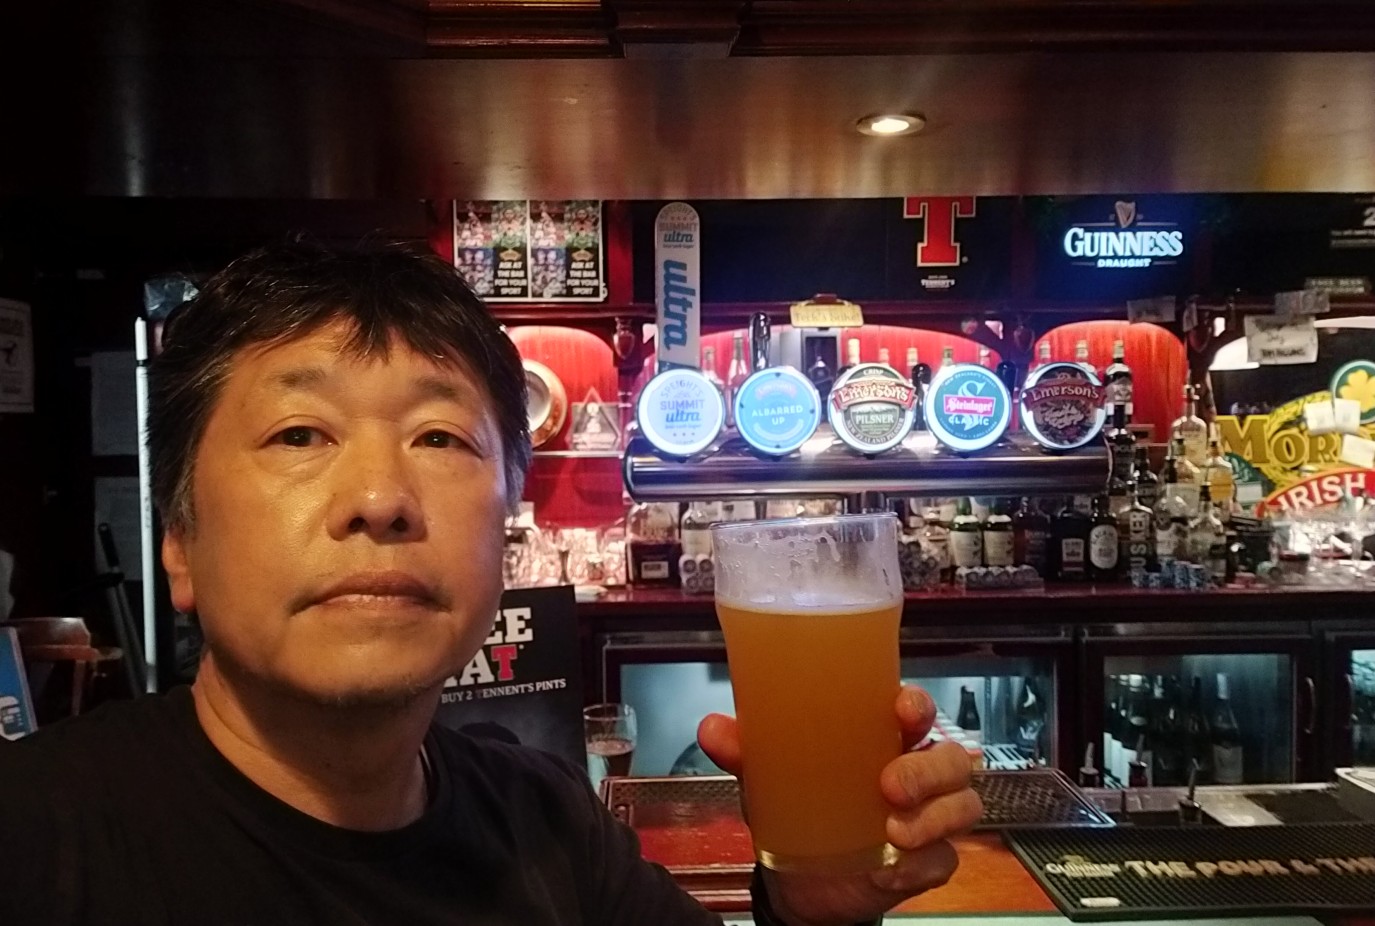 Koji toasts his favourite local English language school the pub